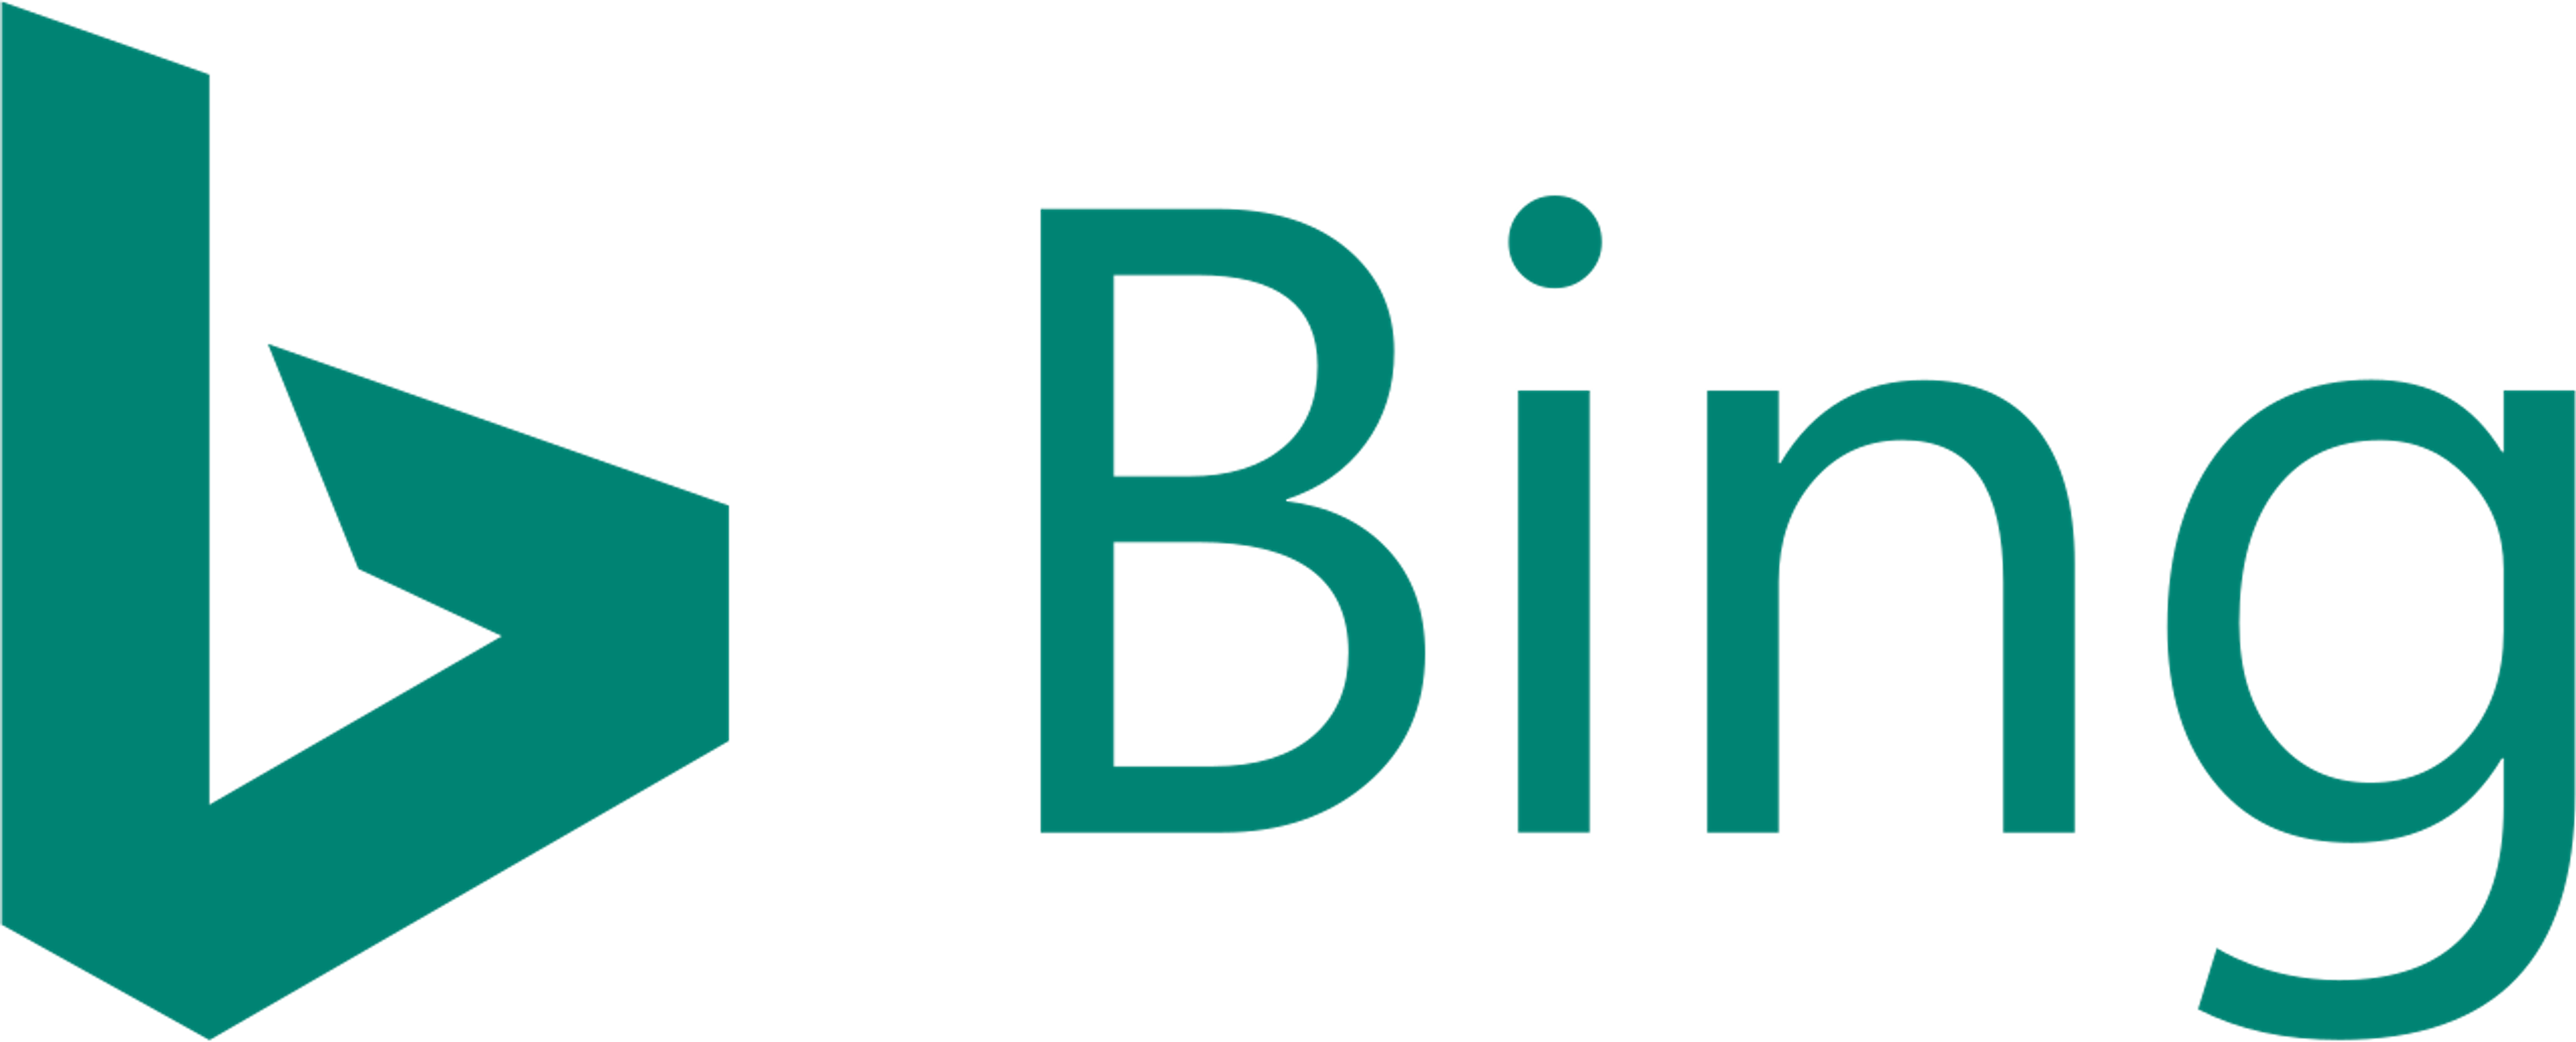 Bing logo 2016 to today